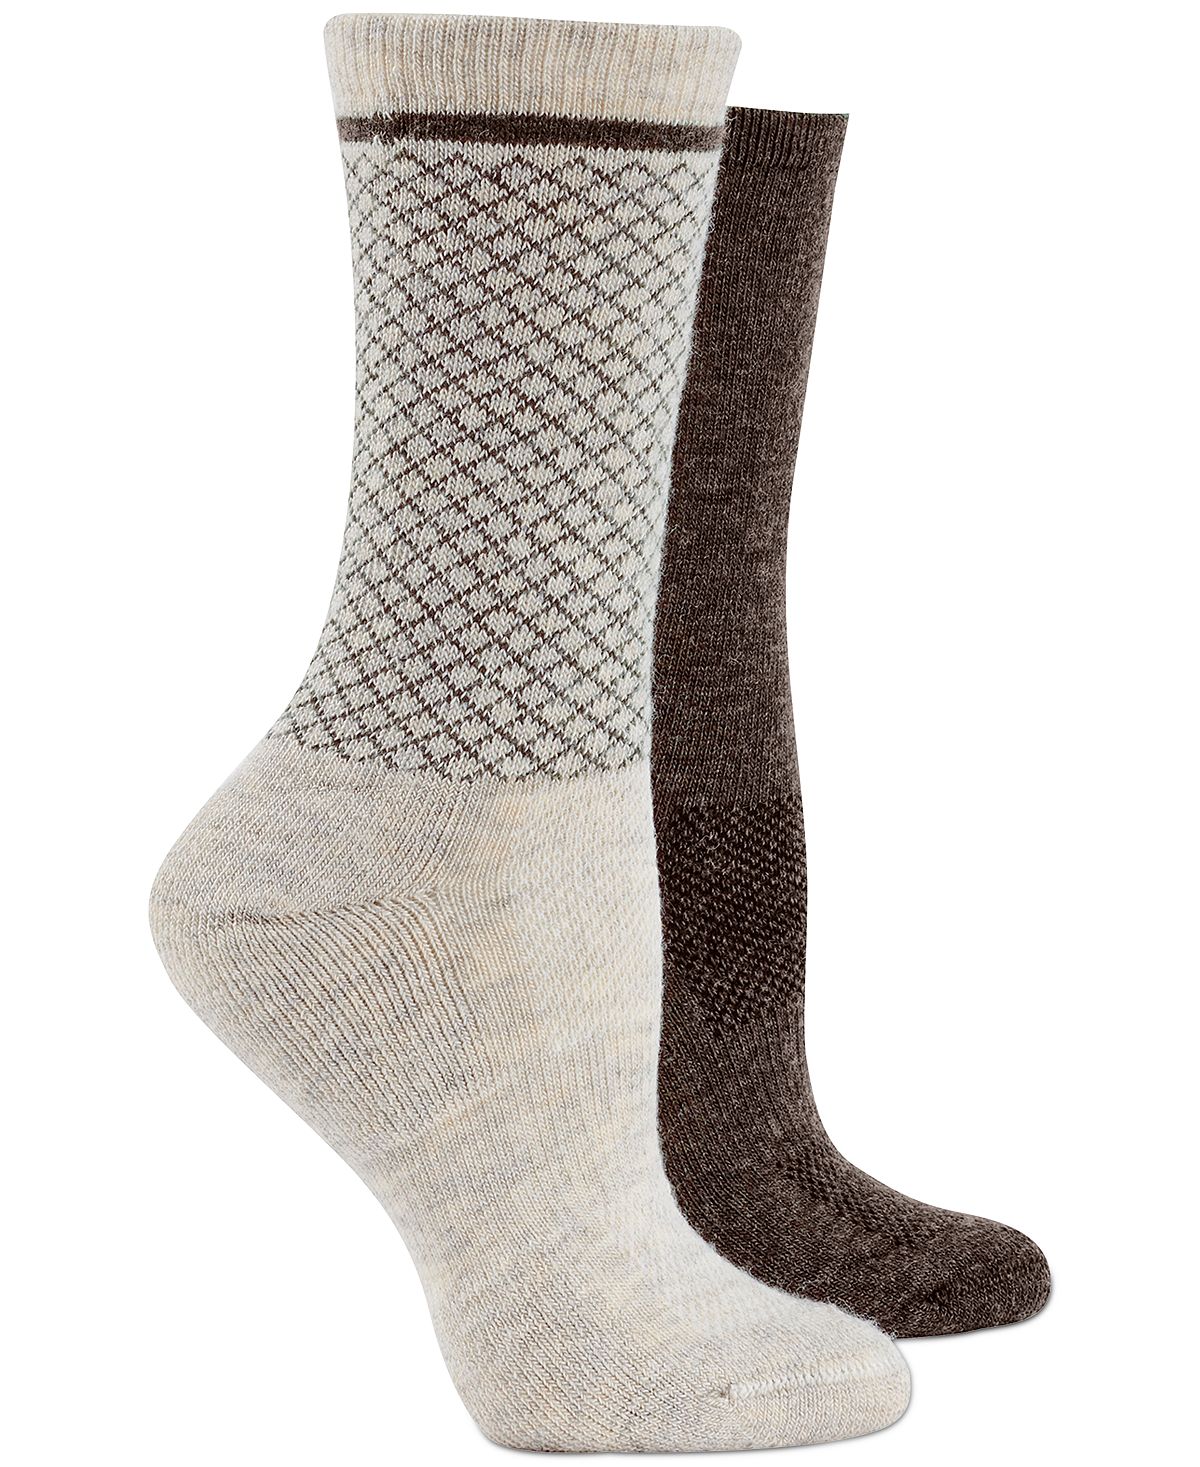 Hue Wo 2-pk. Boot Socks Oatmeal Combo W/espresso Solid